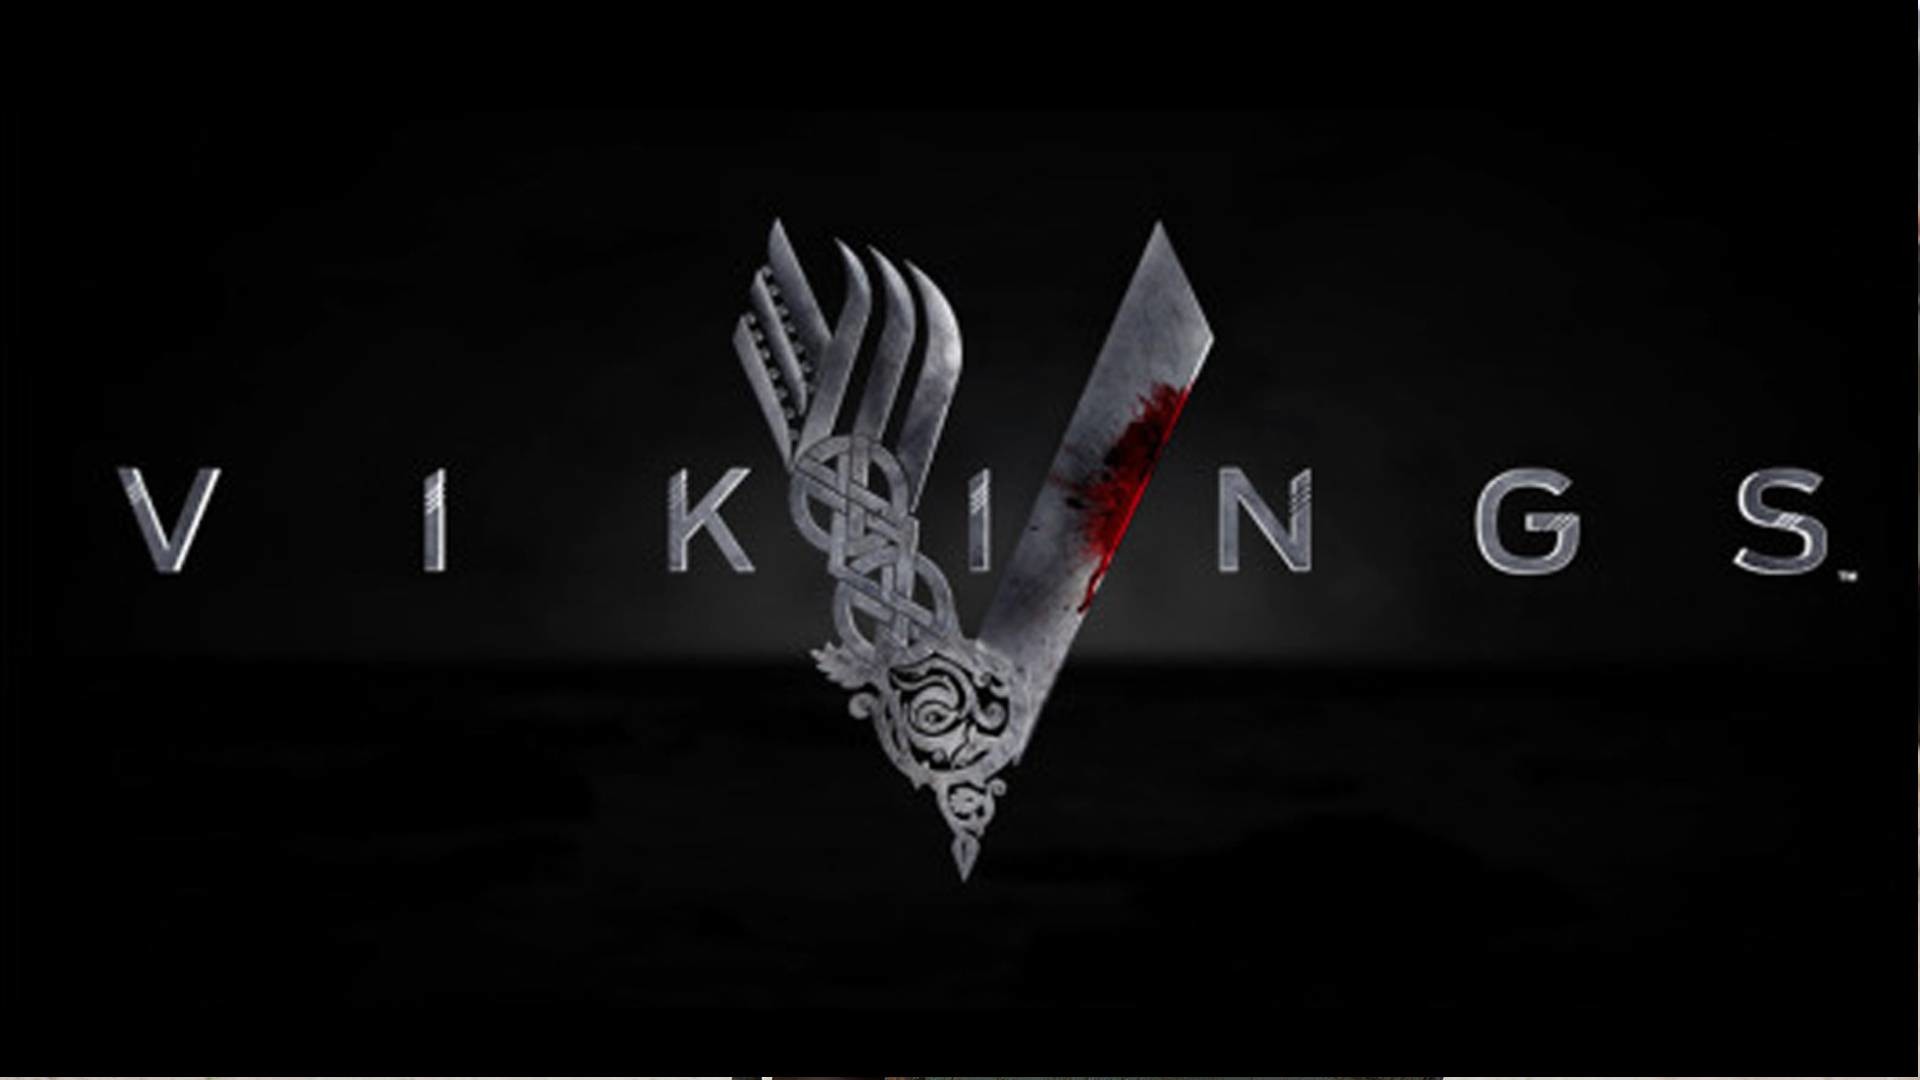 1920x1080 Vikings Logo on Black - Vikings Wallpaper